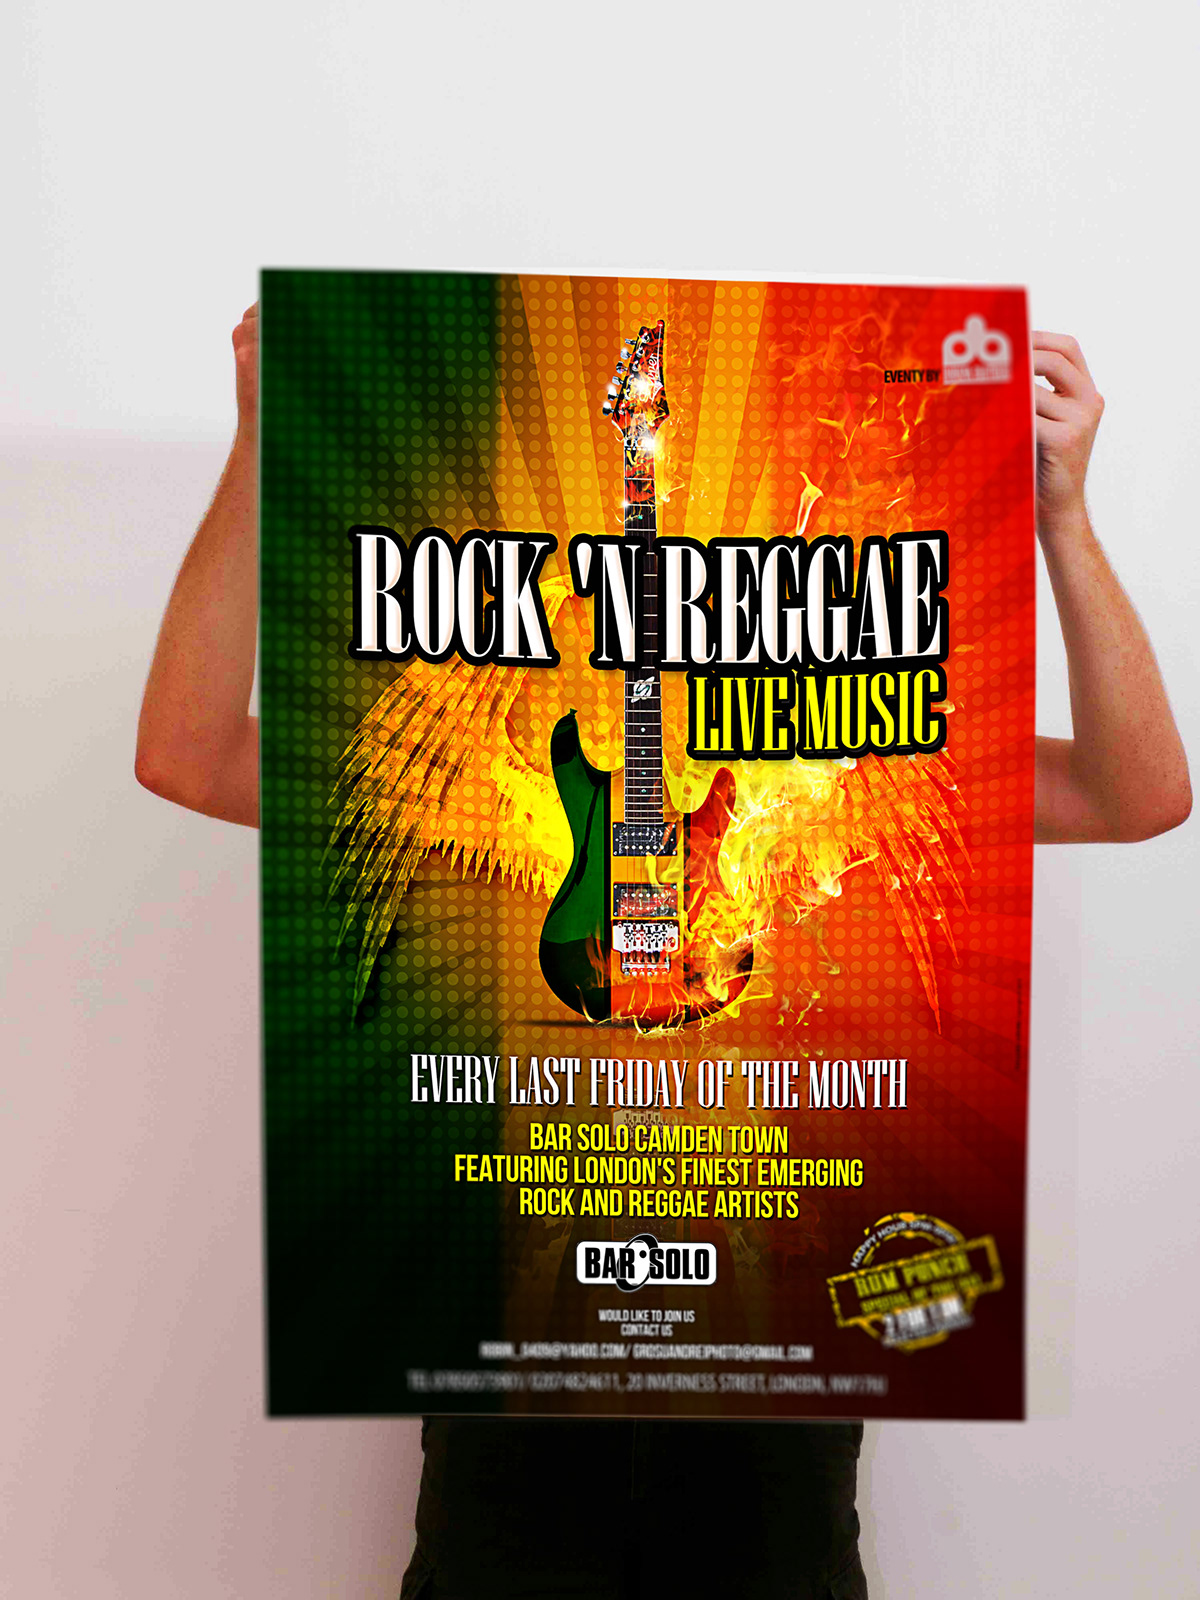 poster reggae rock flame guitar concert bar